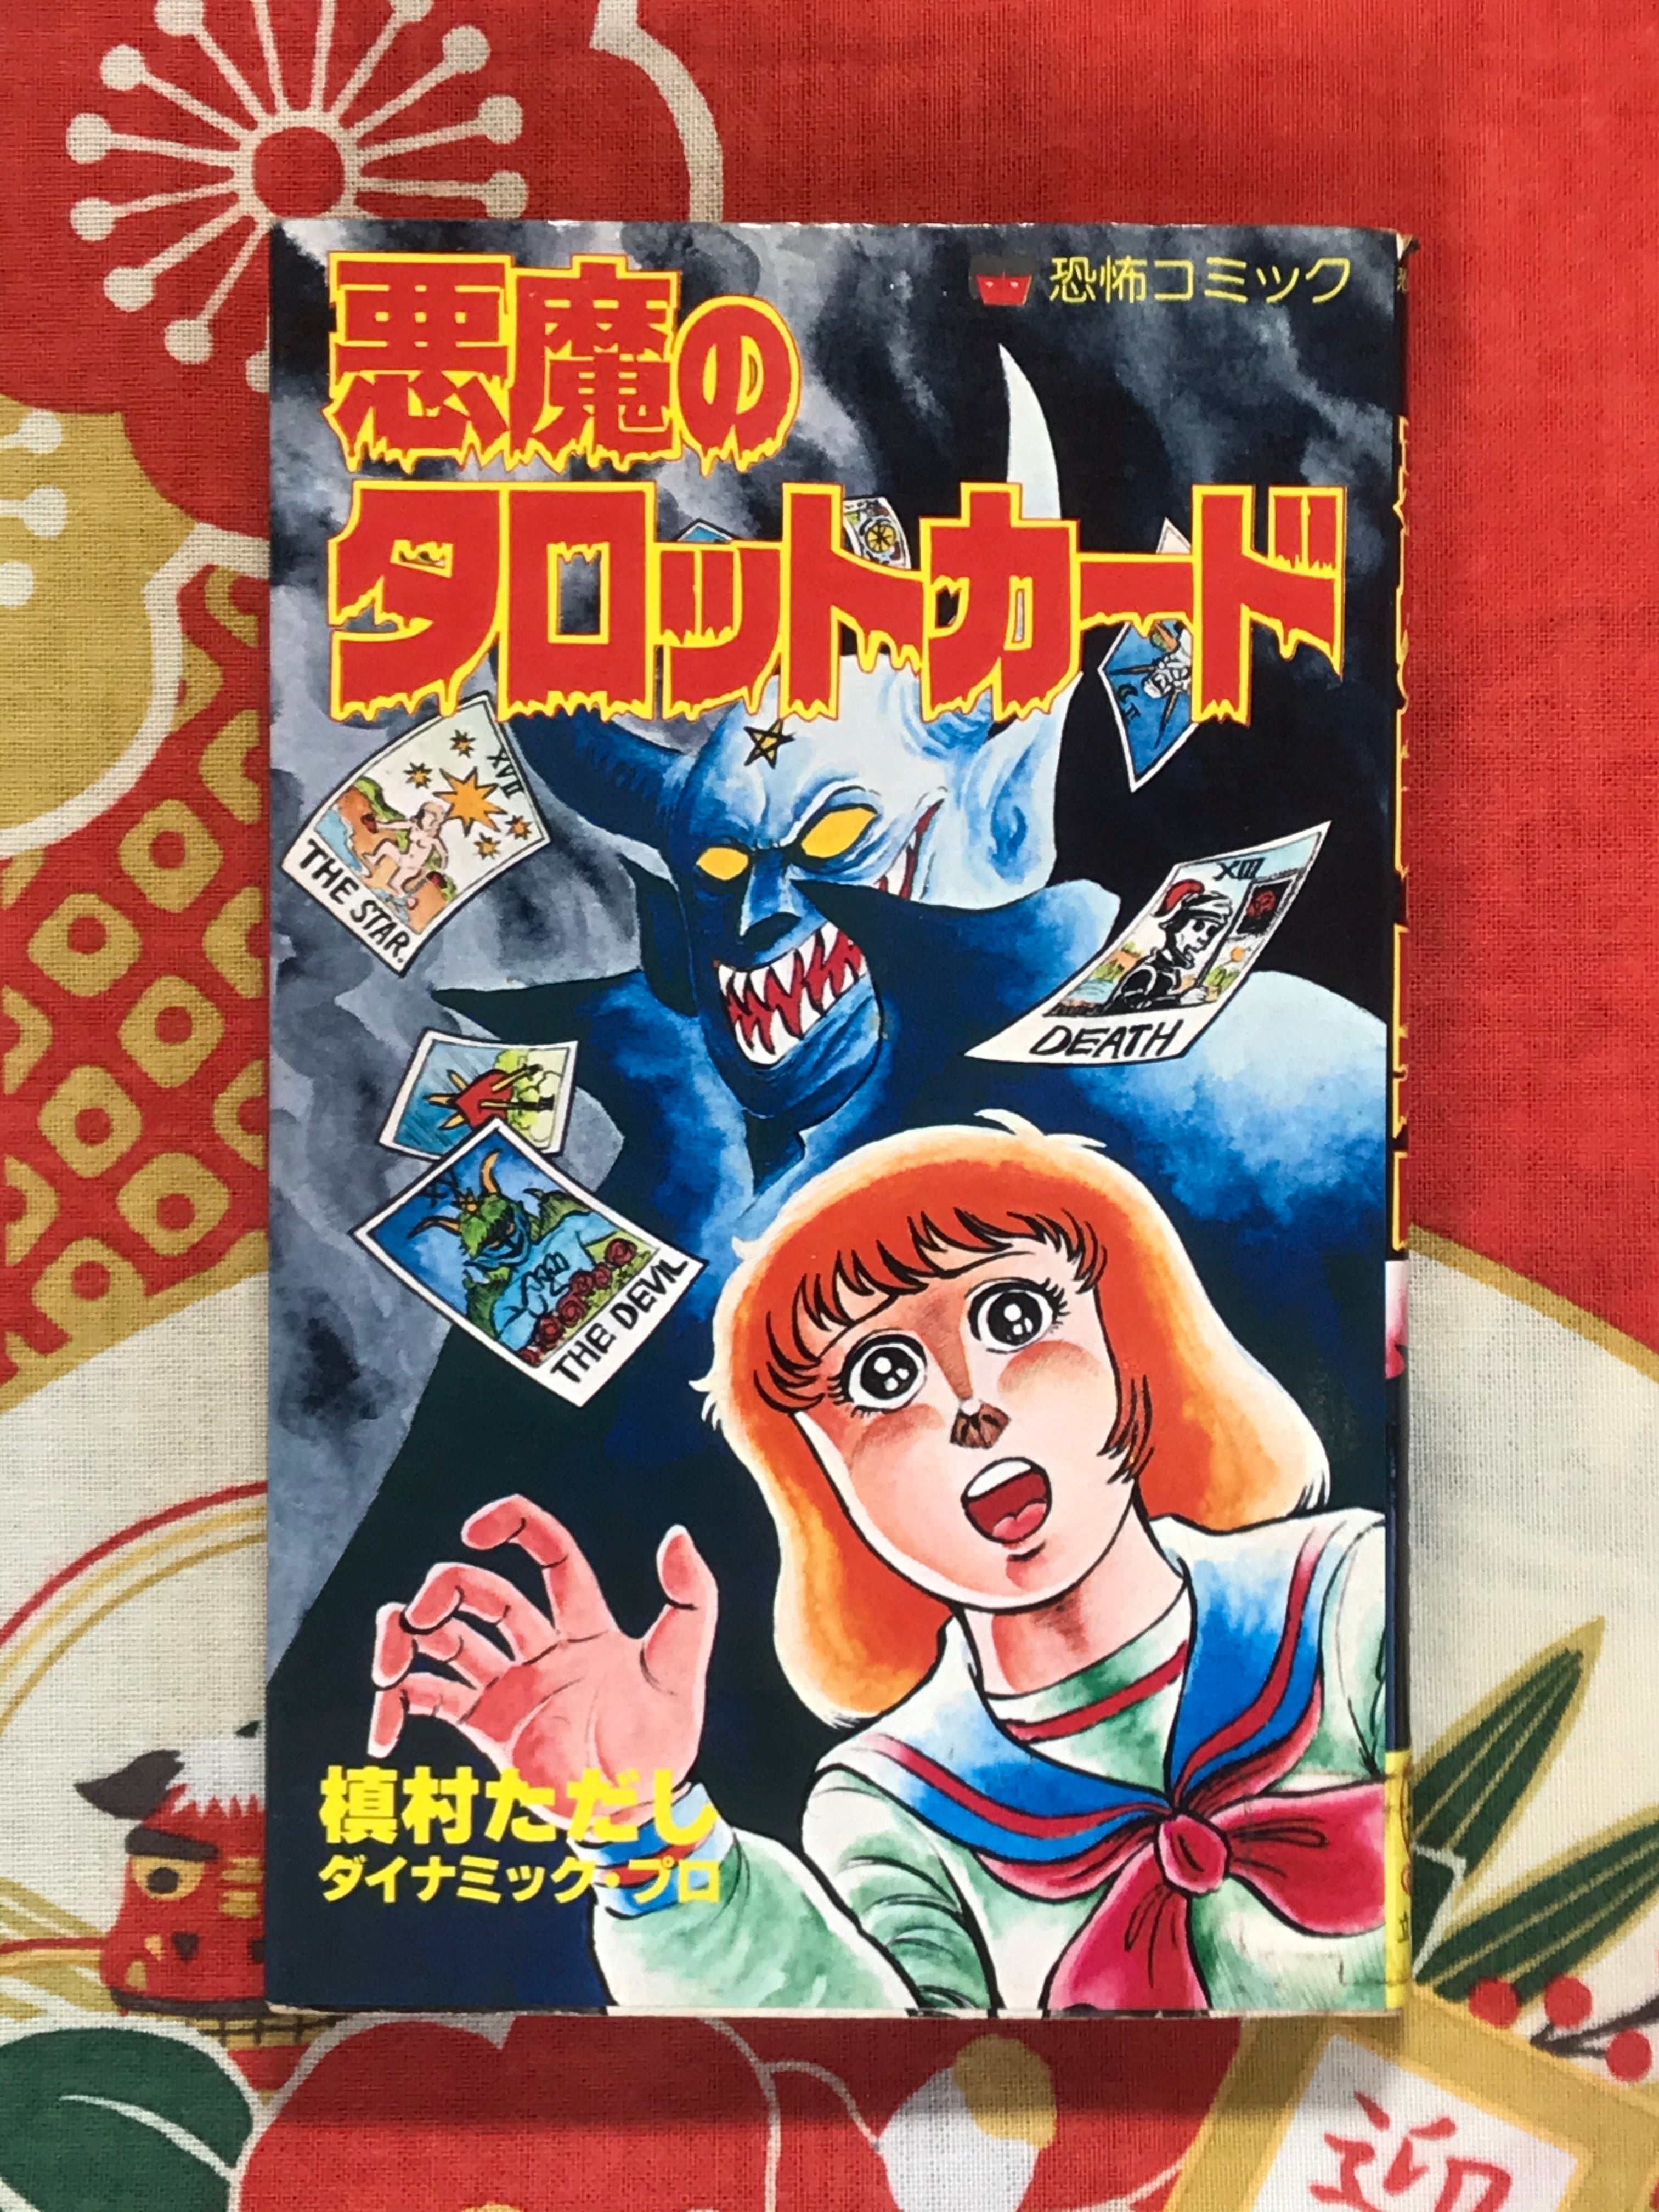 Evil Tarot Cards by Tadashi Makimura (1984)